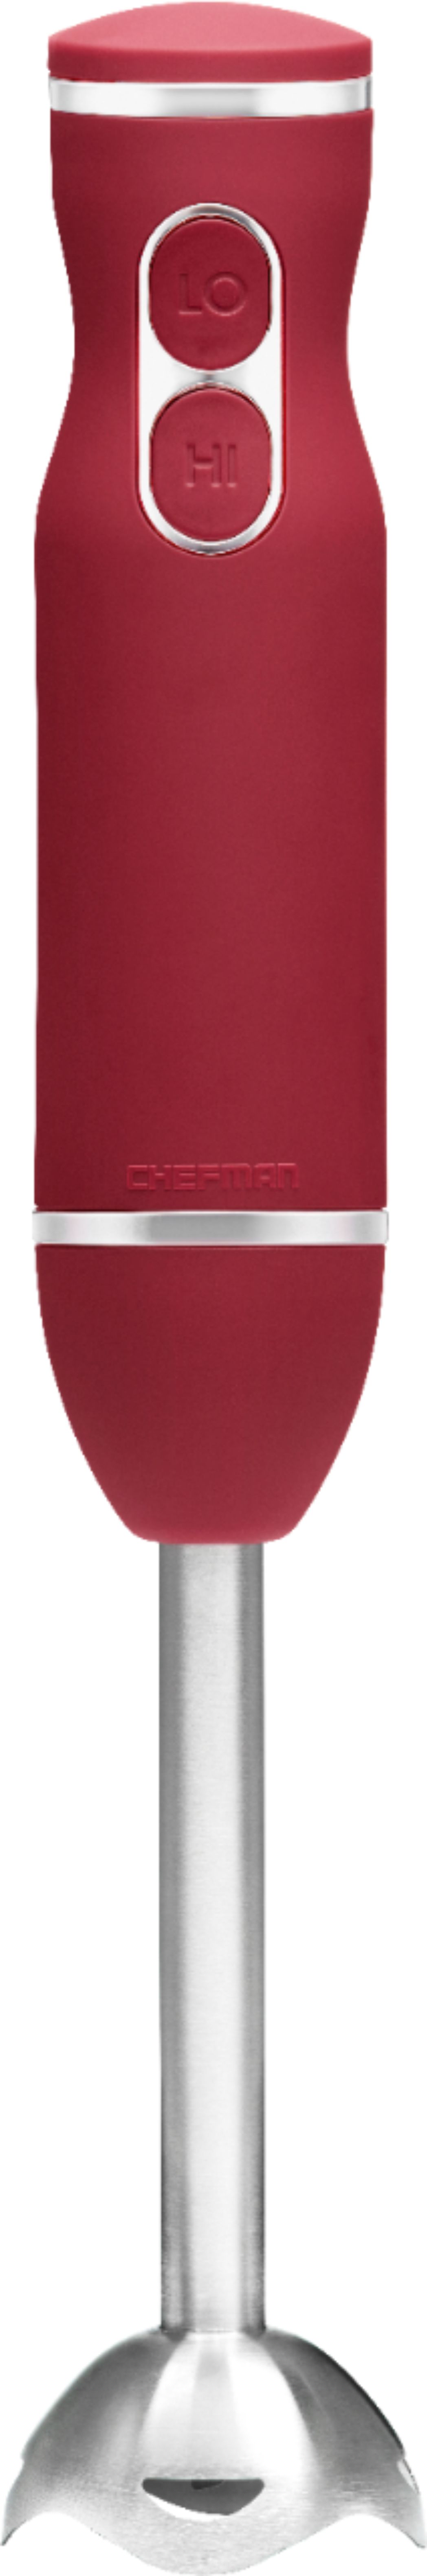 Chefman Immersion Stick Hand Blender with Stainless Steel Blades RED  RJ19-V3-RBR-RED - Best Buy